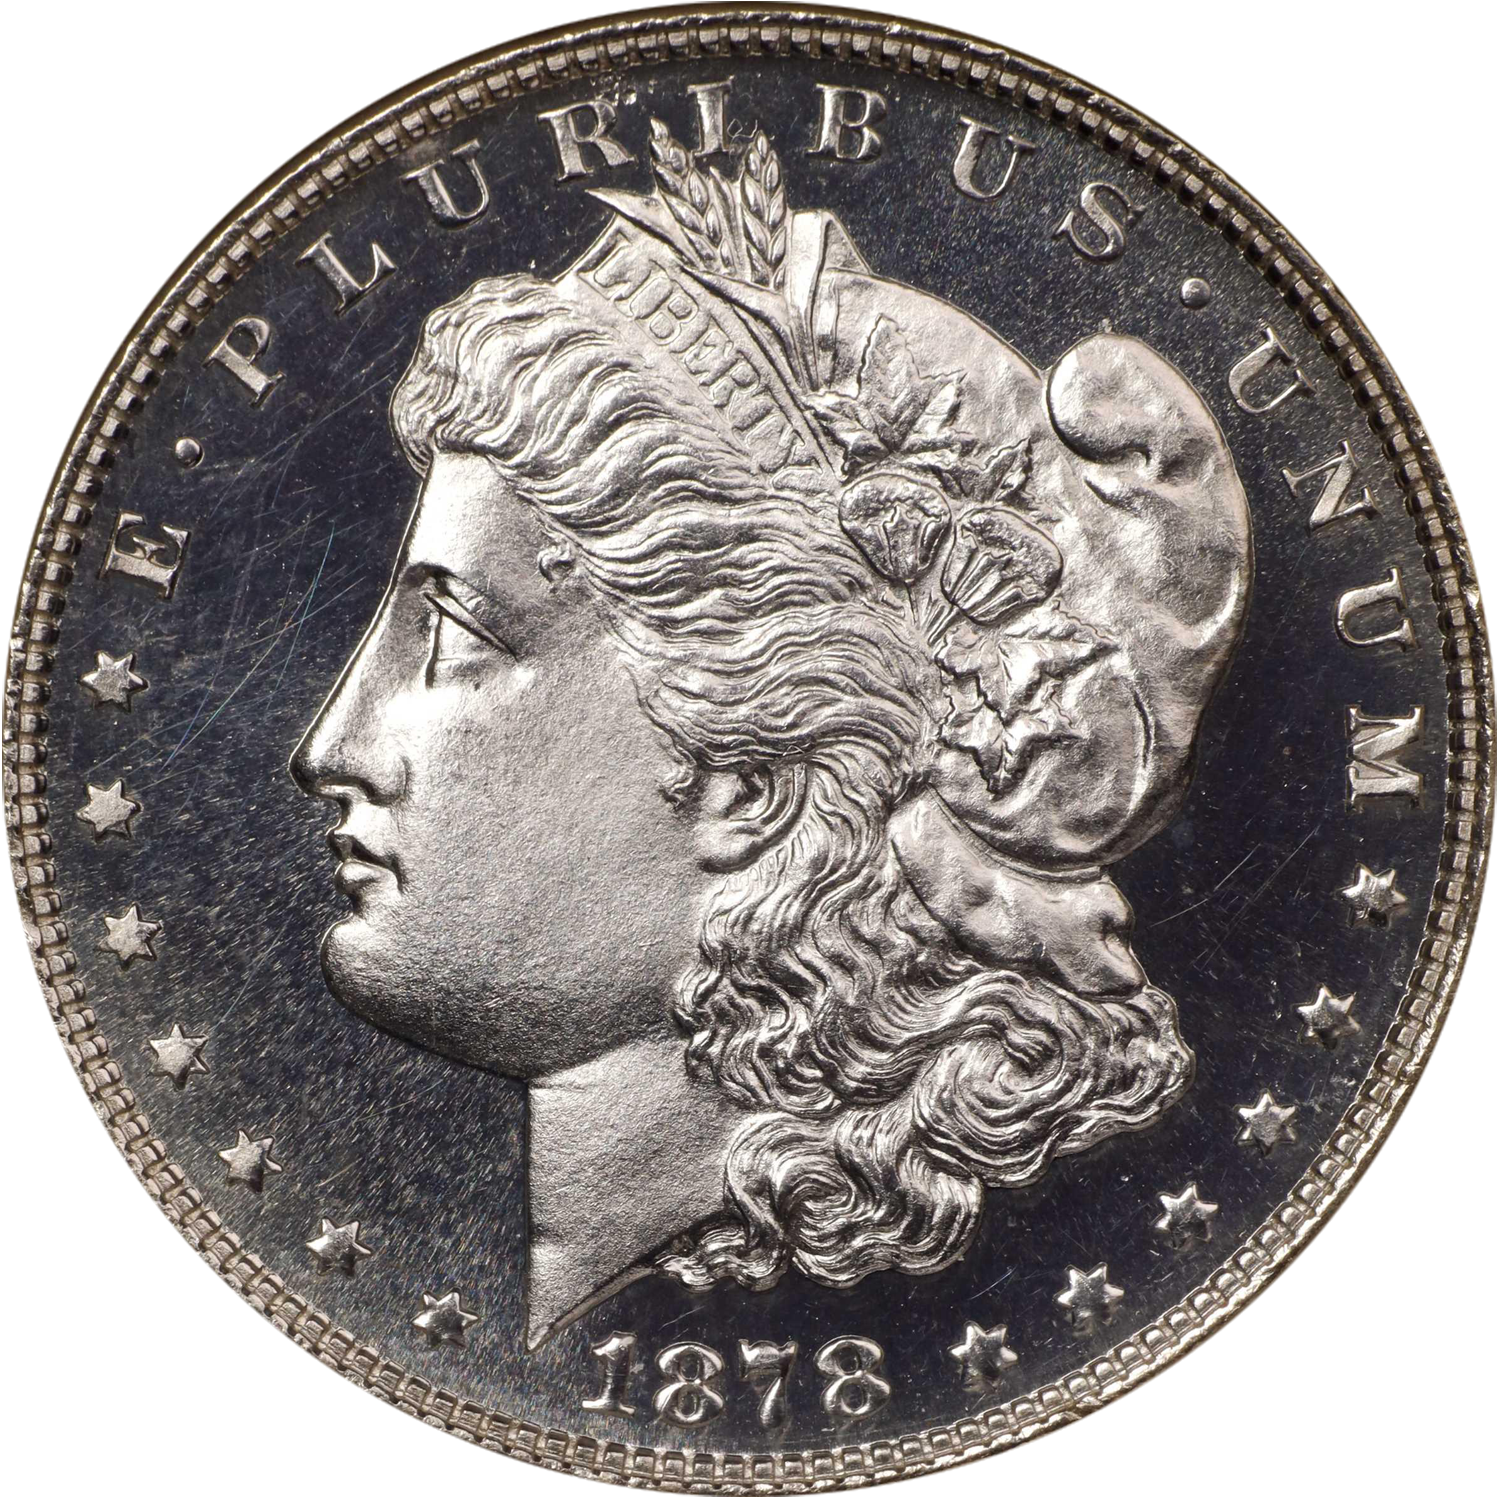 1878 8 tf morgan dollar price guide value